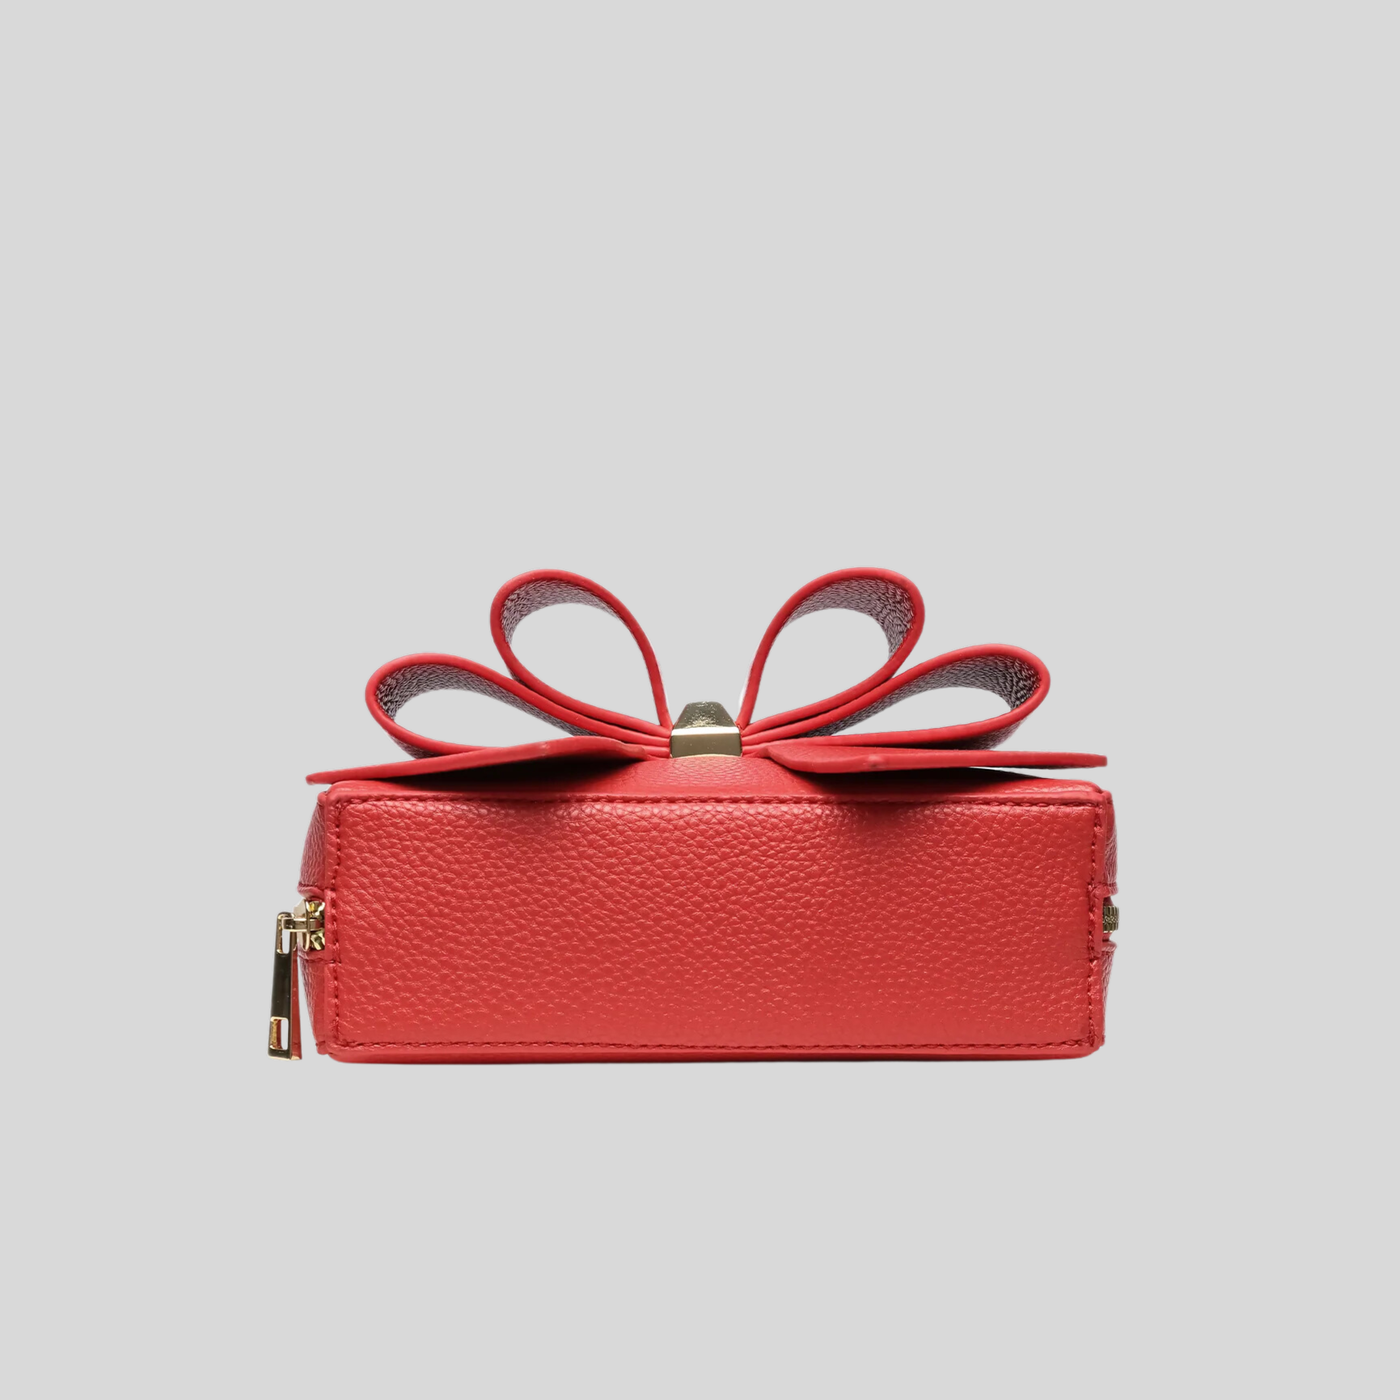 Gotstyle Fashion - Like Dreams Bags Bow Mini Pebbled Crossbody Bag - Red